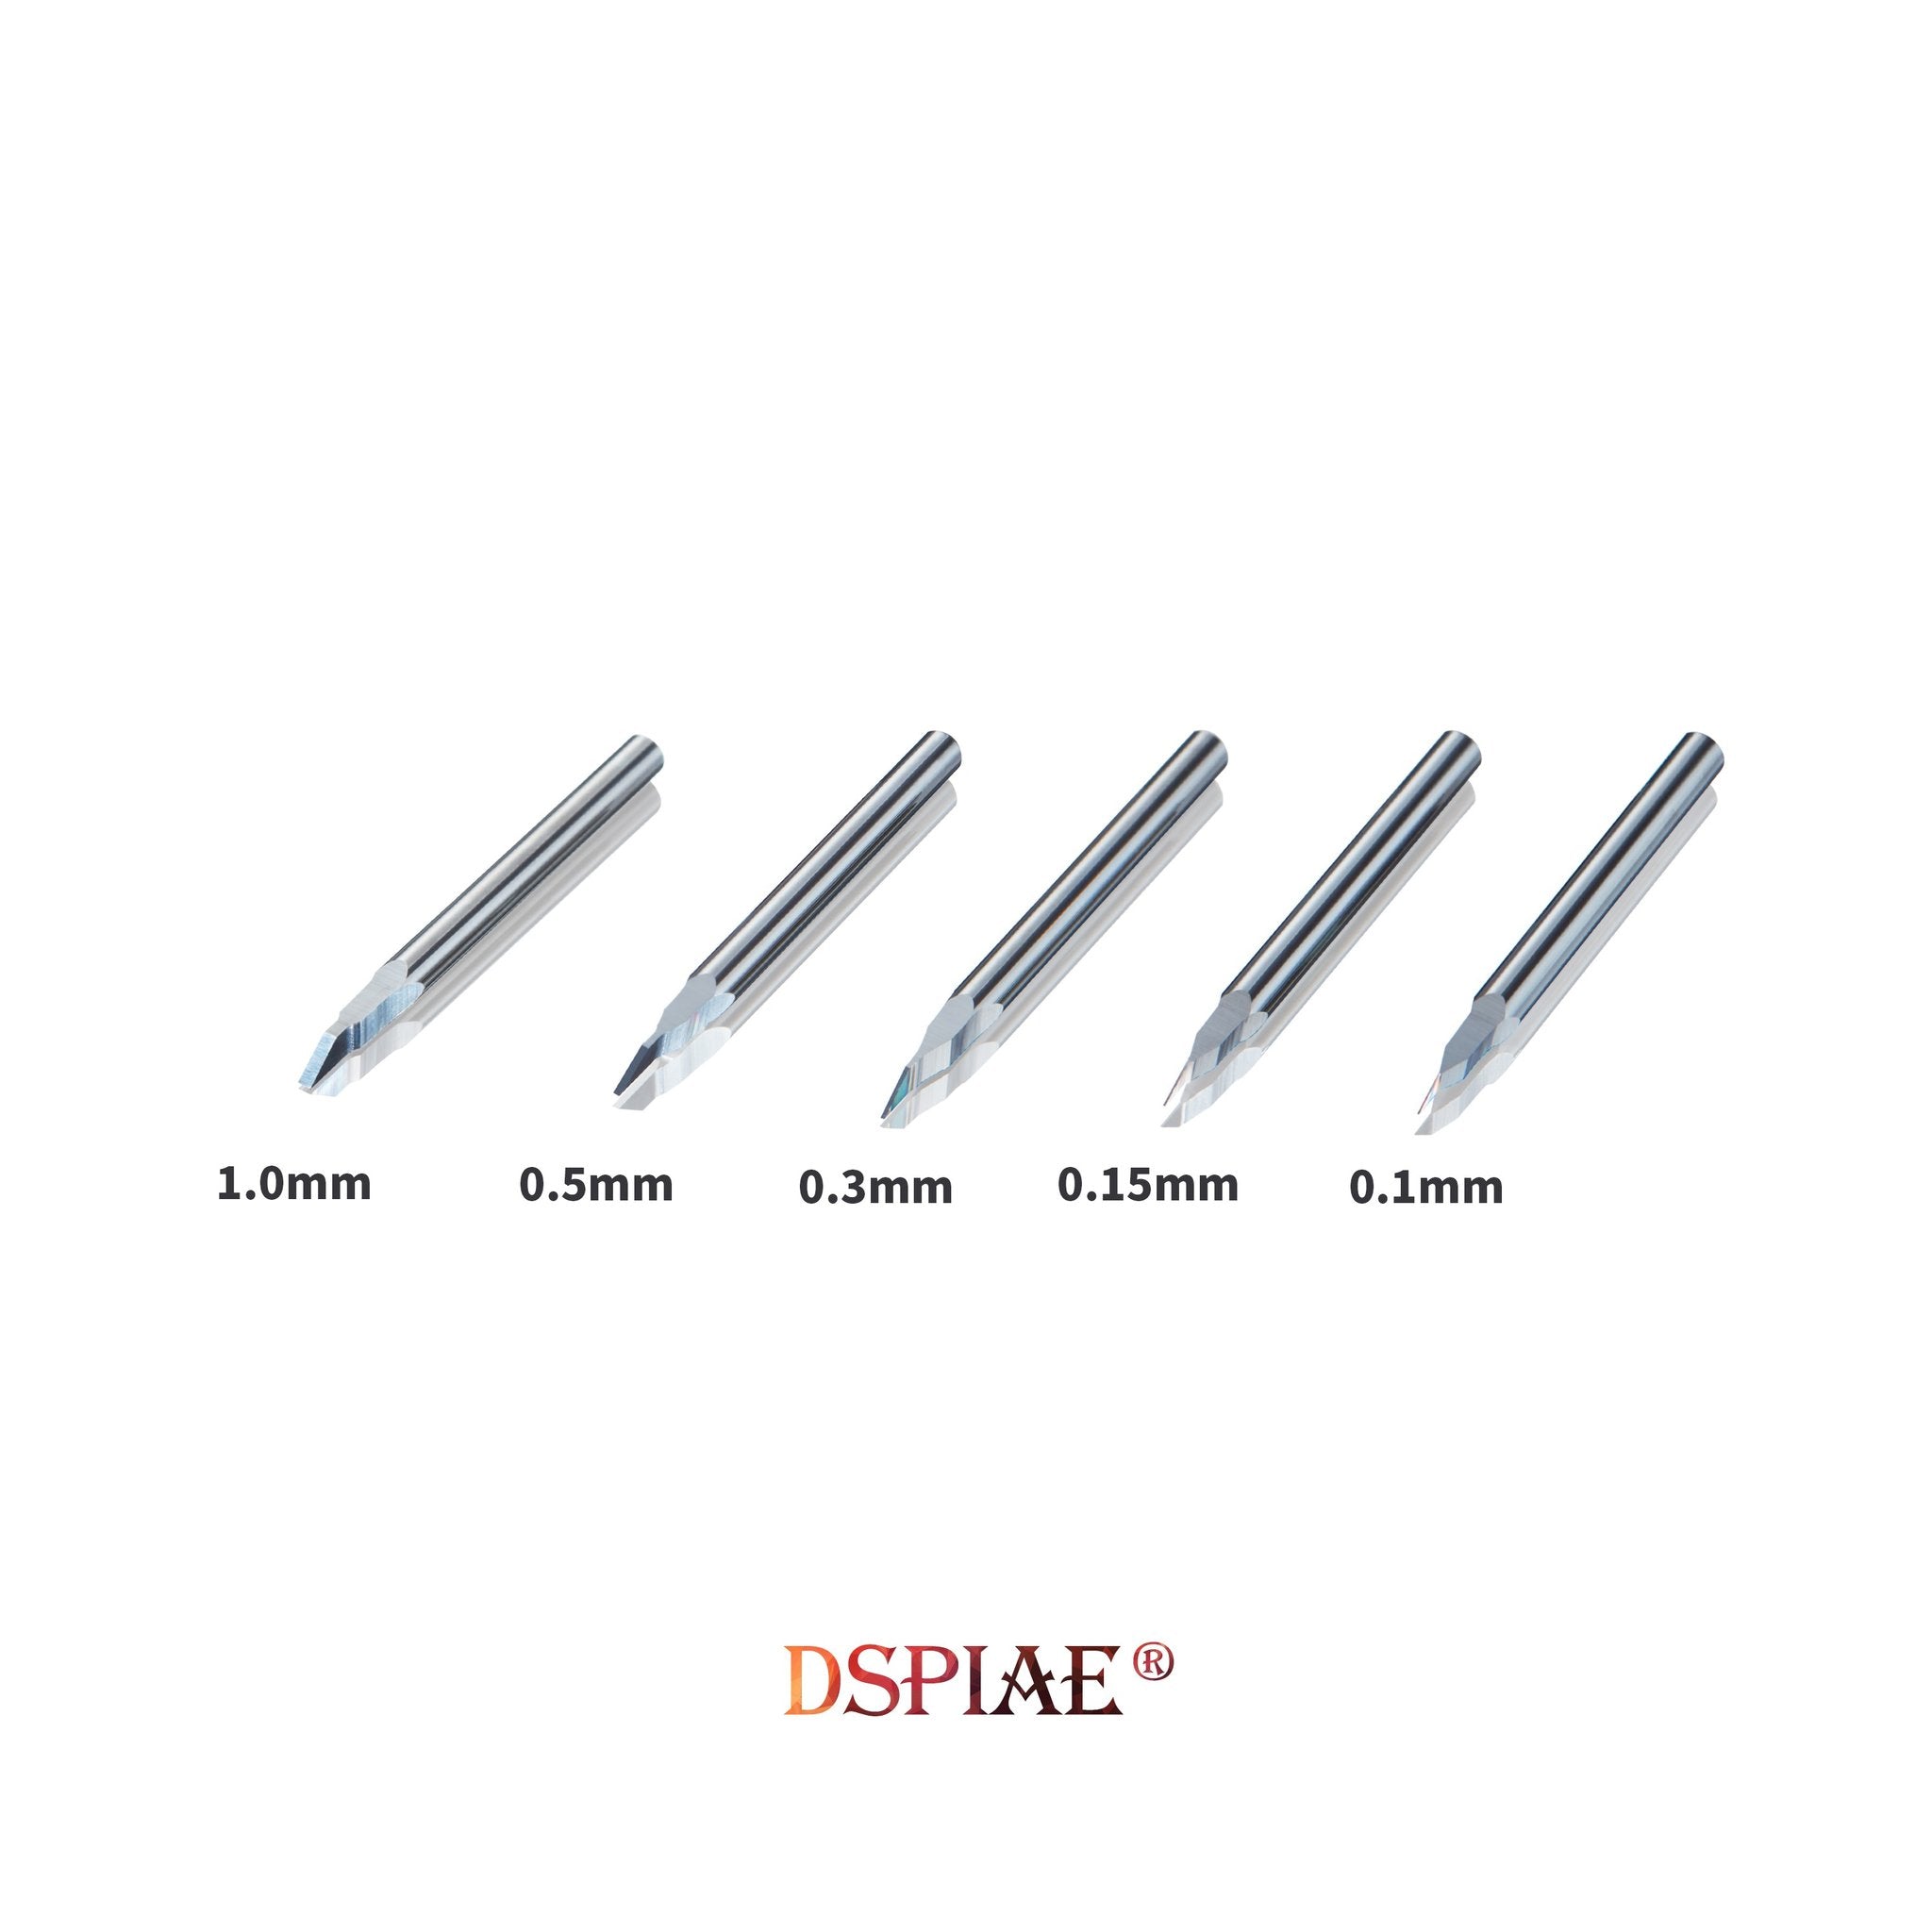 DSPIAE: Push Broach Chisel 5-Piece Set (0.1mm, 0.15mm, 0.3mm, 0.5mm, 1.0mm)